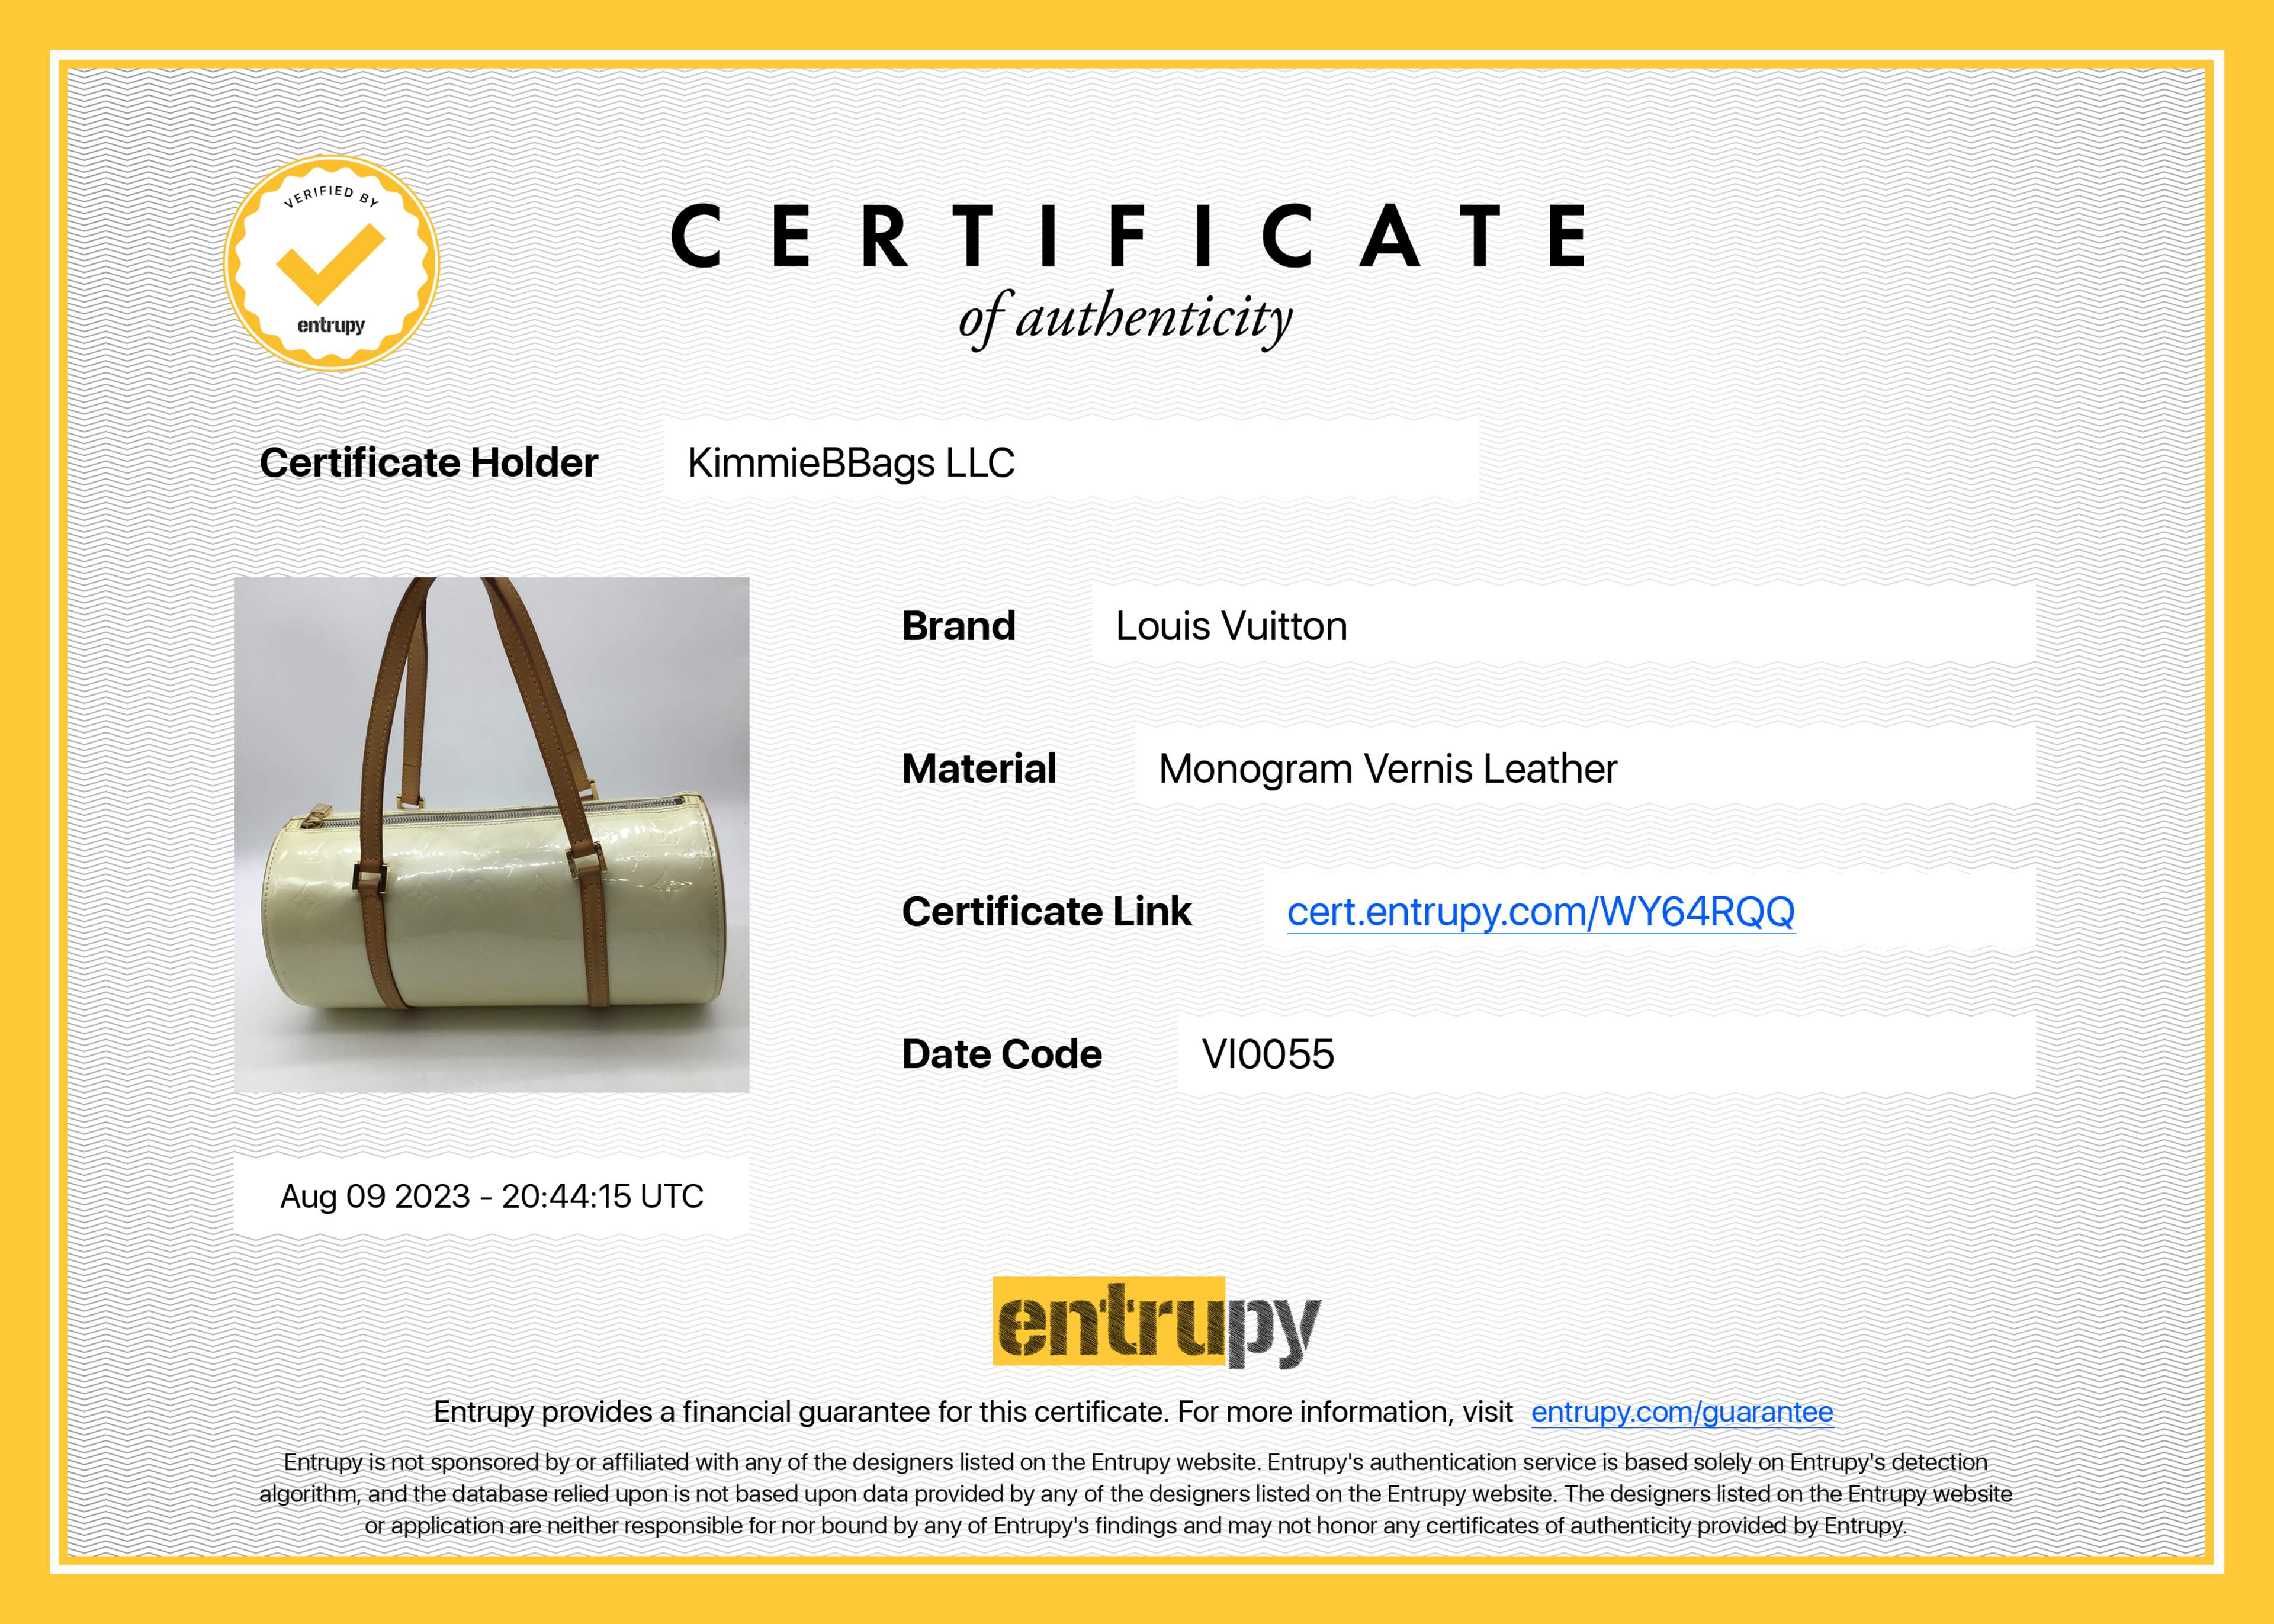 Louis Vuitton Yellow Vernis Leather Bedford Barrel Bag (800